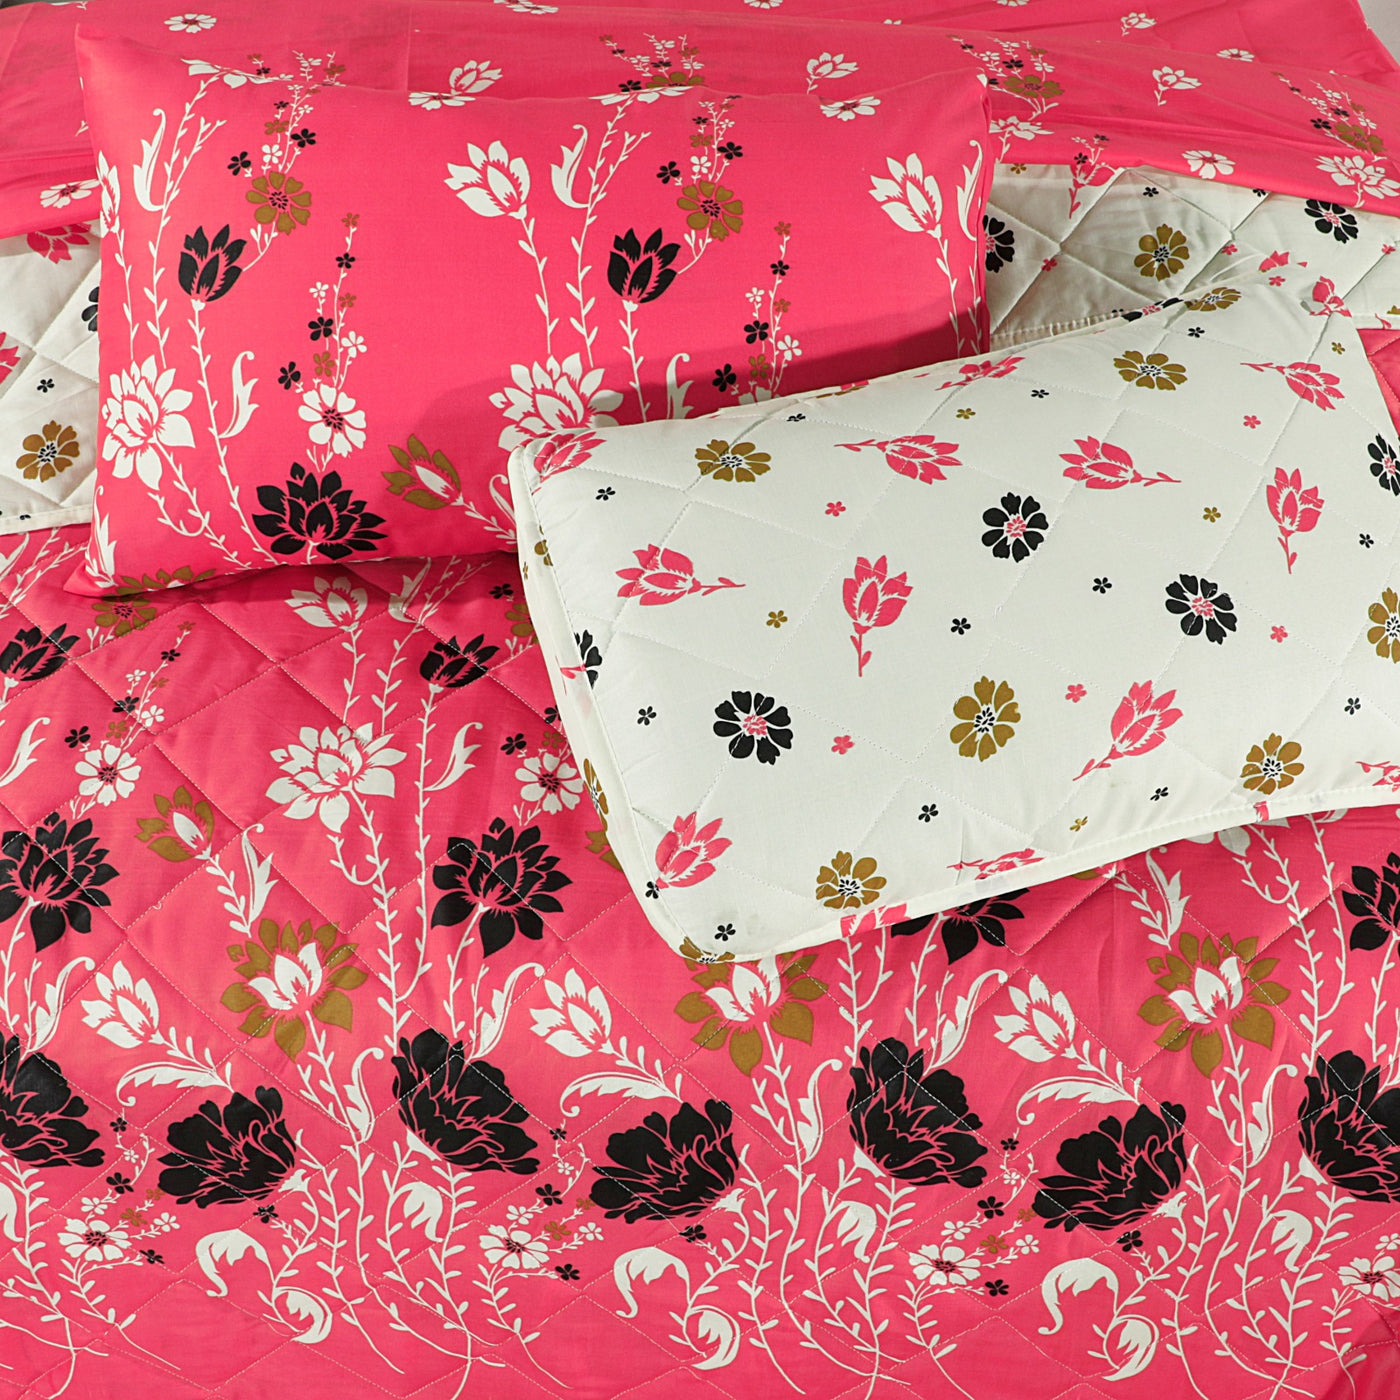 Pink Beauty - Summer Comforter Set (Light Filling)